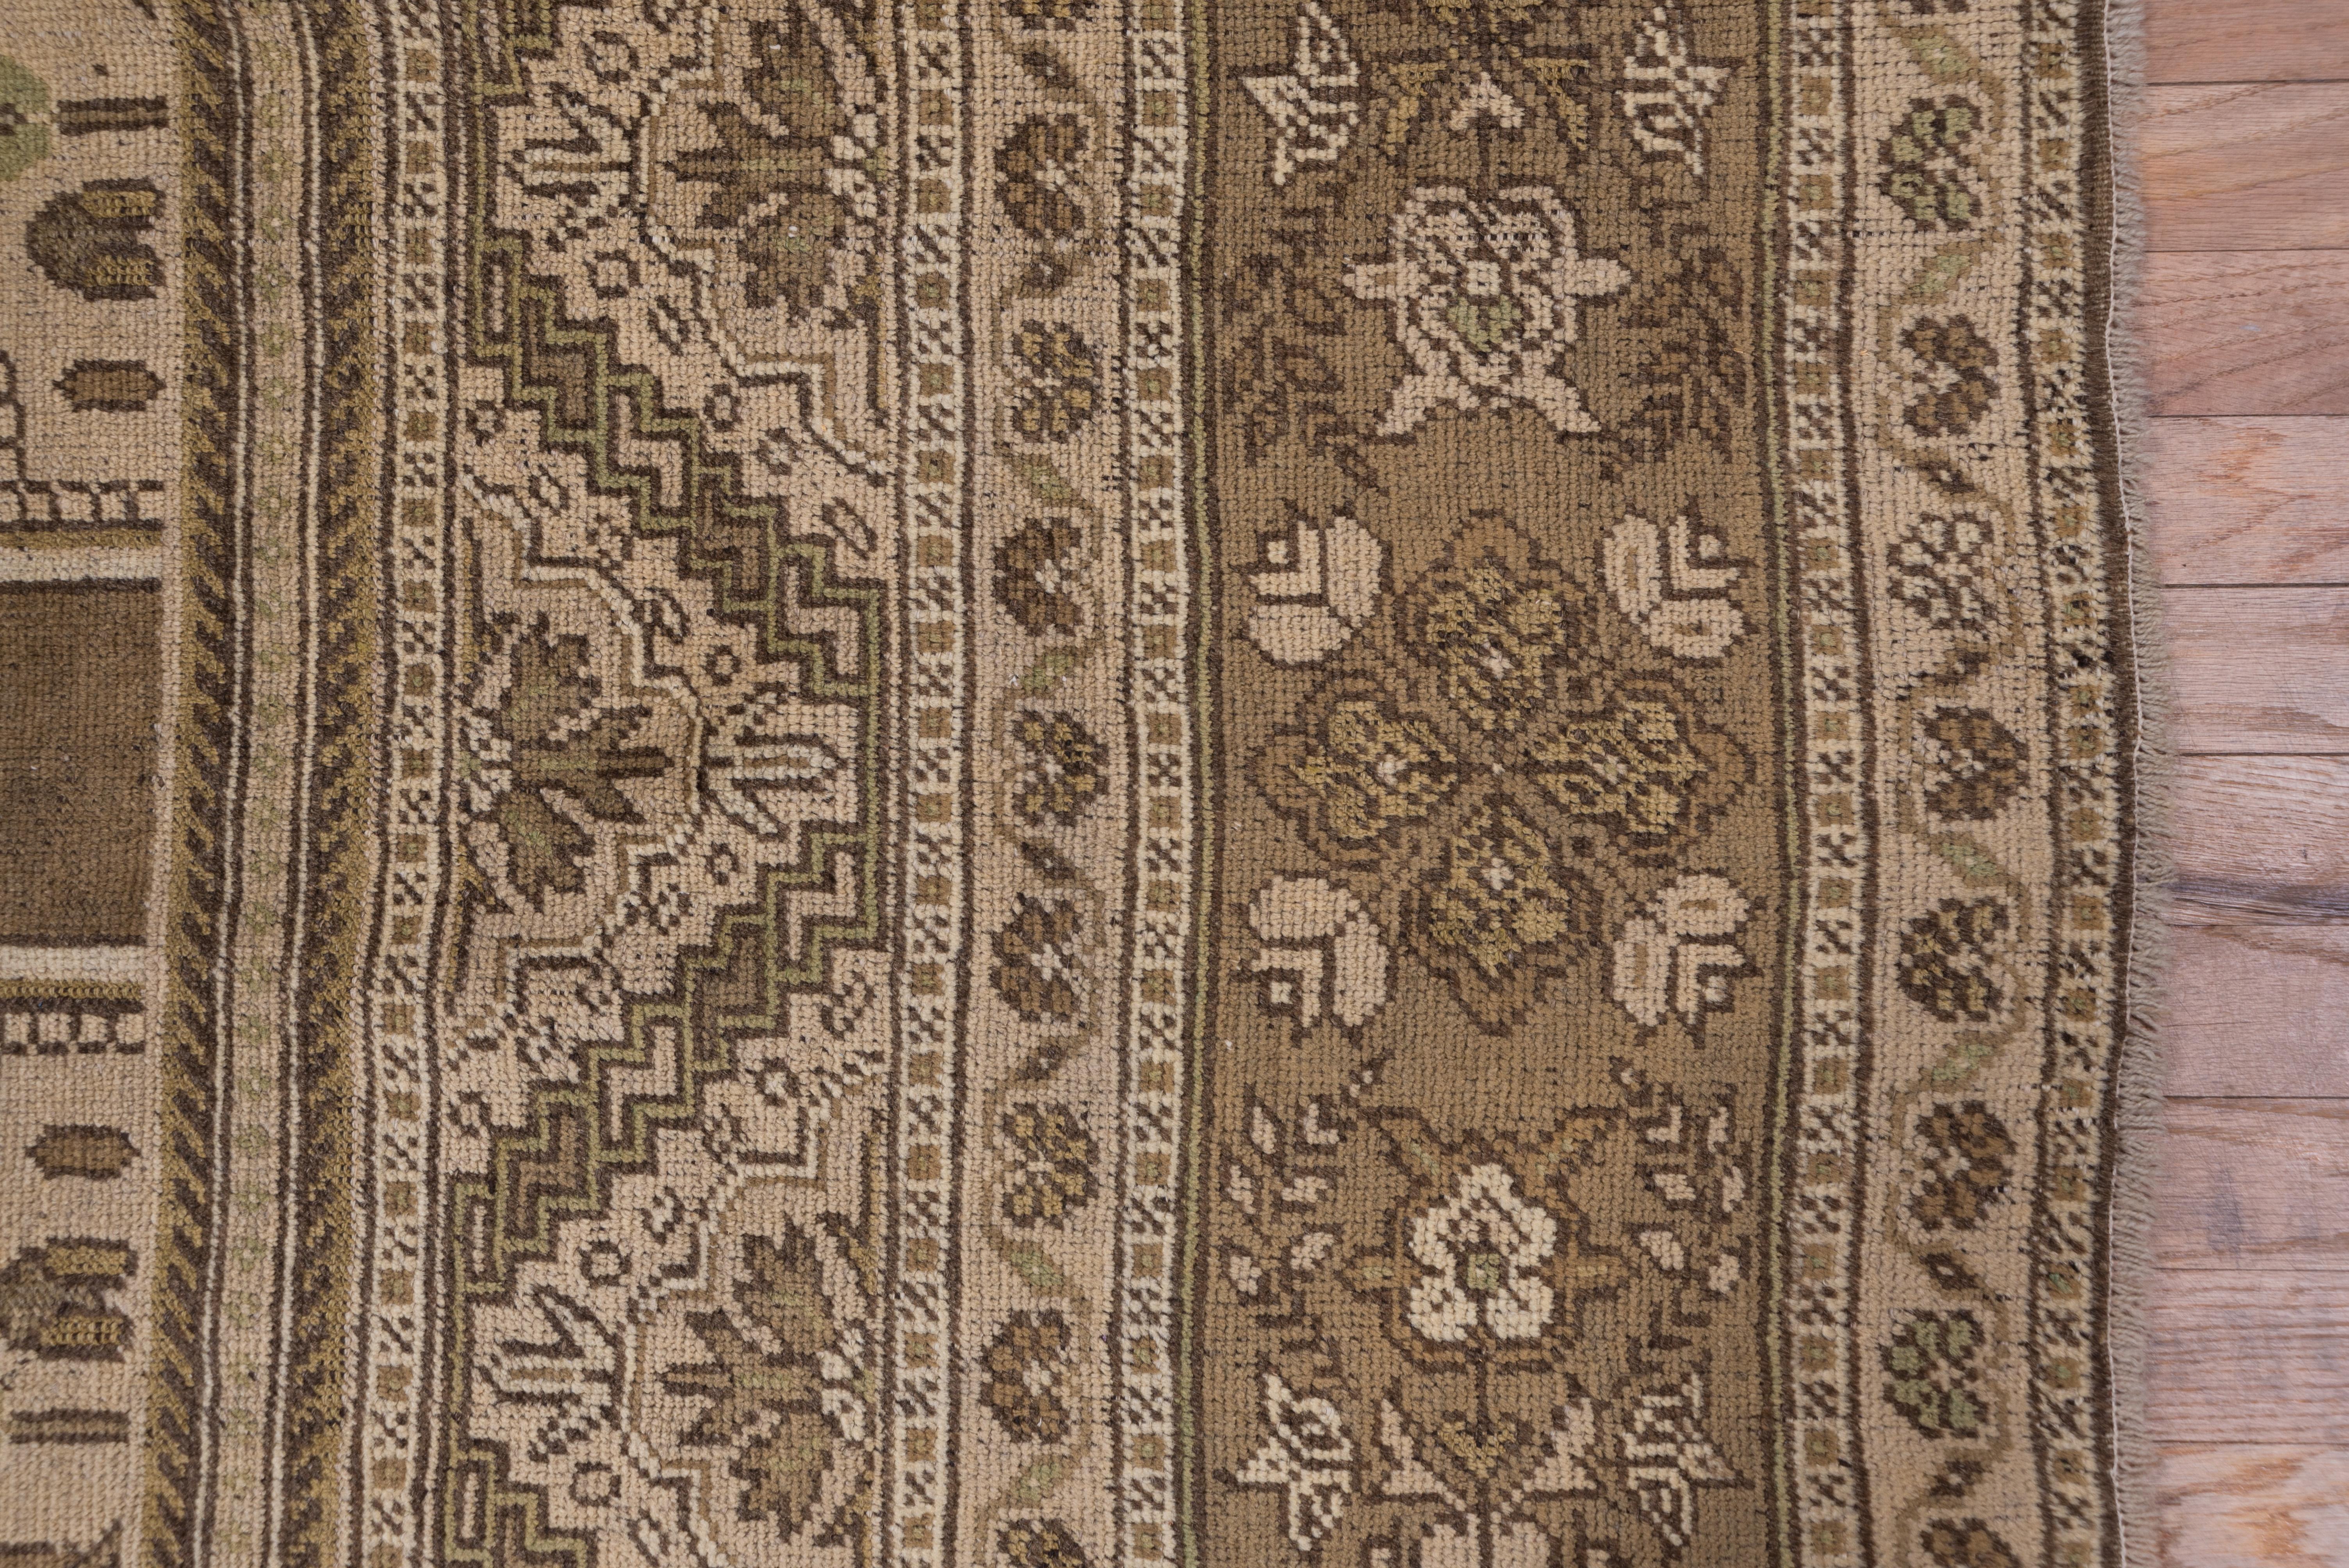 Antique Turkish Oushak Carpet, Brown Field, circa 1940s For Sale 1